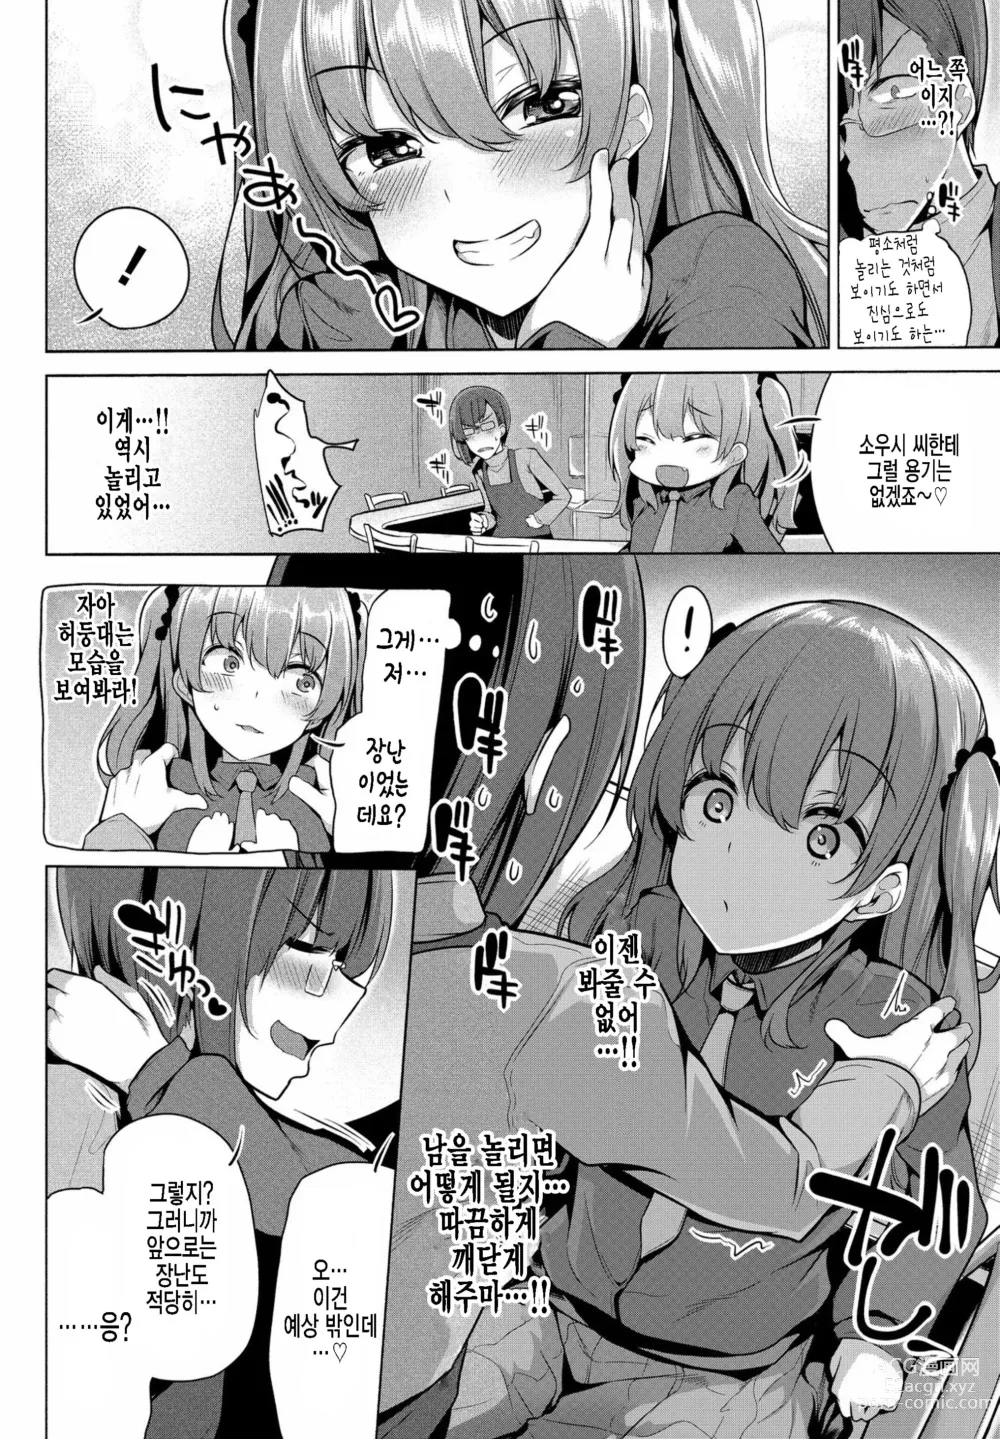 Page 10 of manga Mesugaki Toka Mou Iwasenaishi.｜더 이상 메스가키라고 불리지 않겠어.